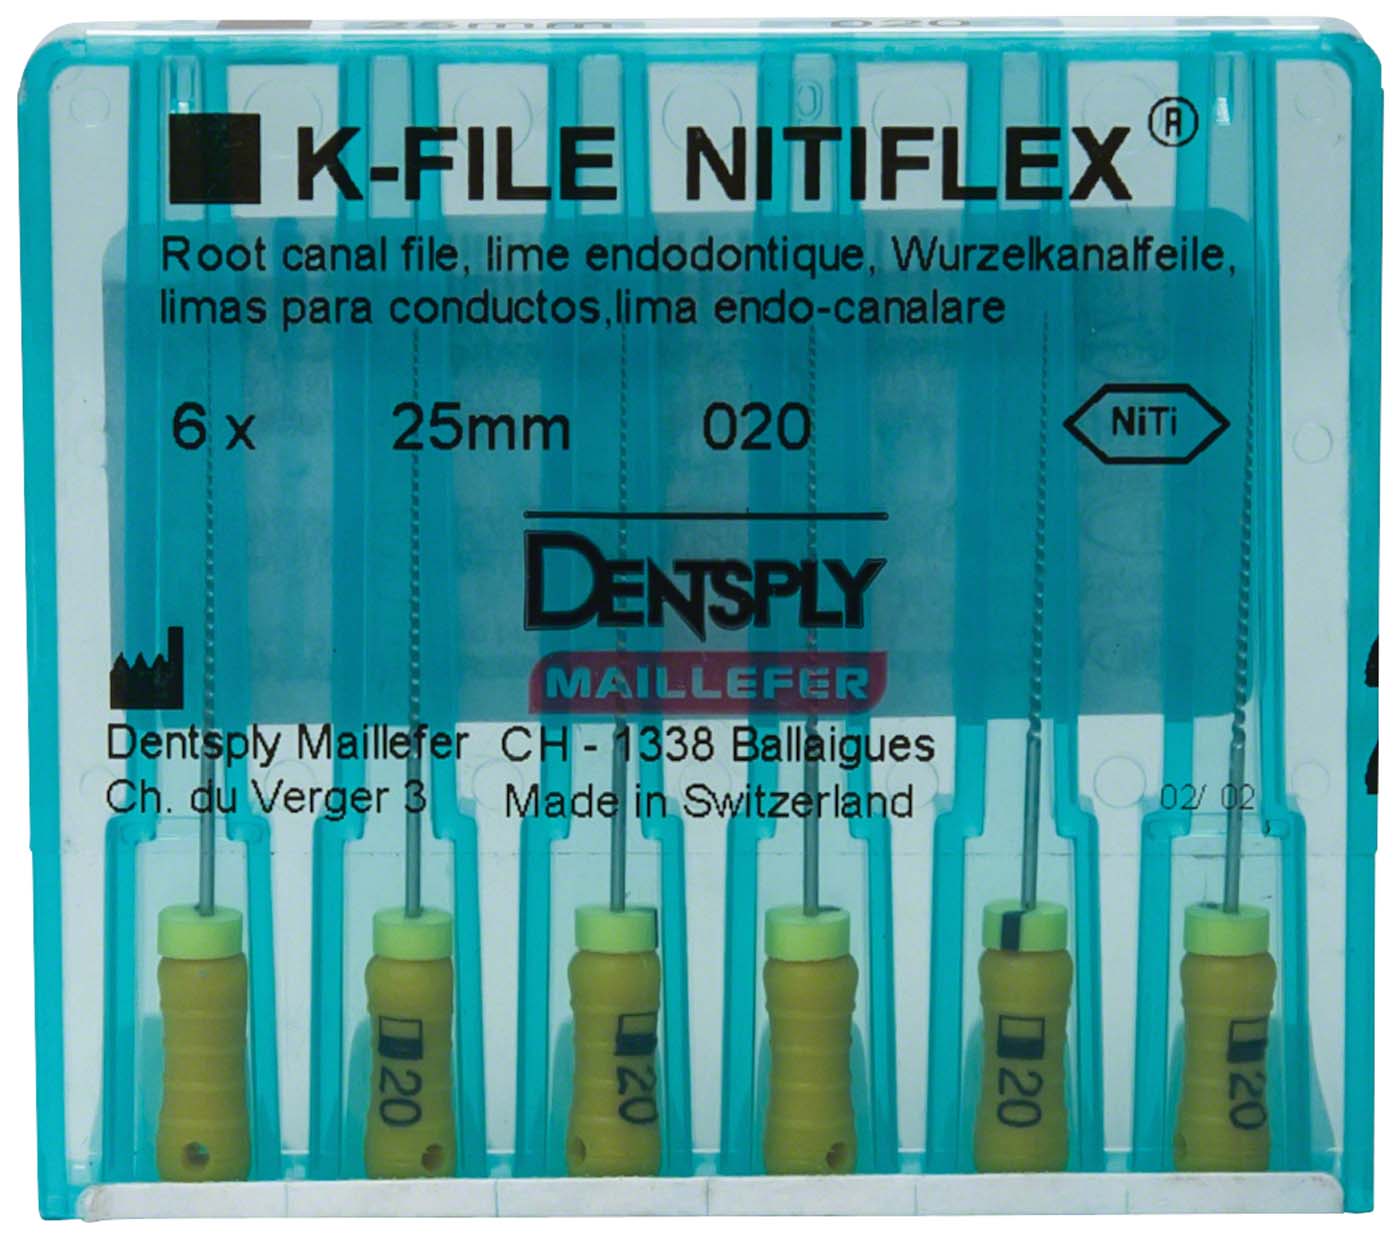 File NiTiflex Dentsply Sirona